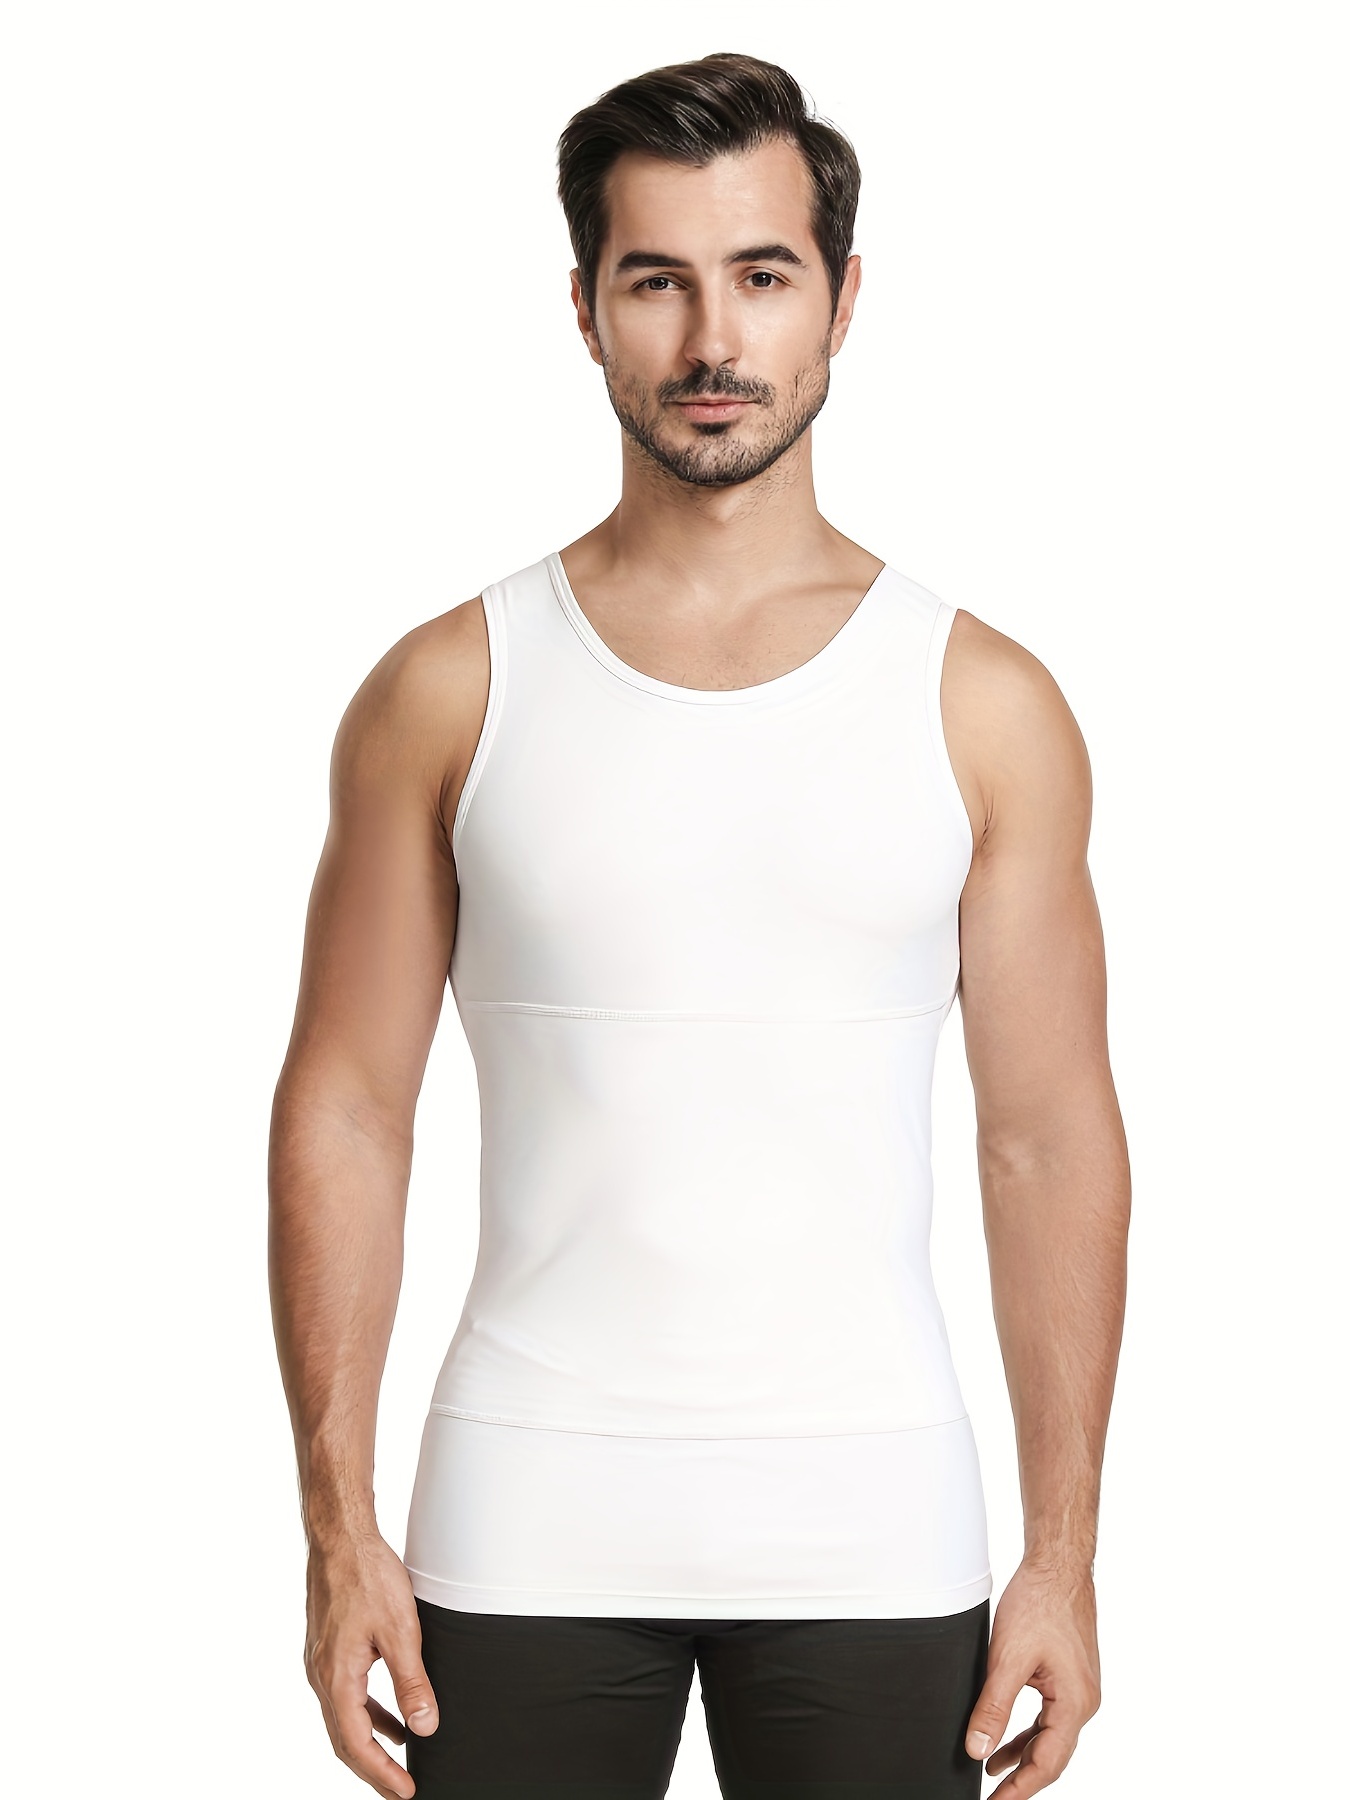 Gynecomastia Men Compression Shirt White Tank Top Body Shaper